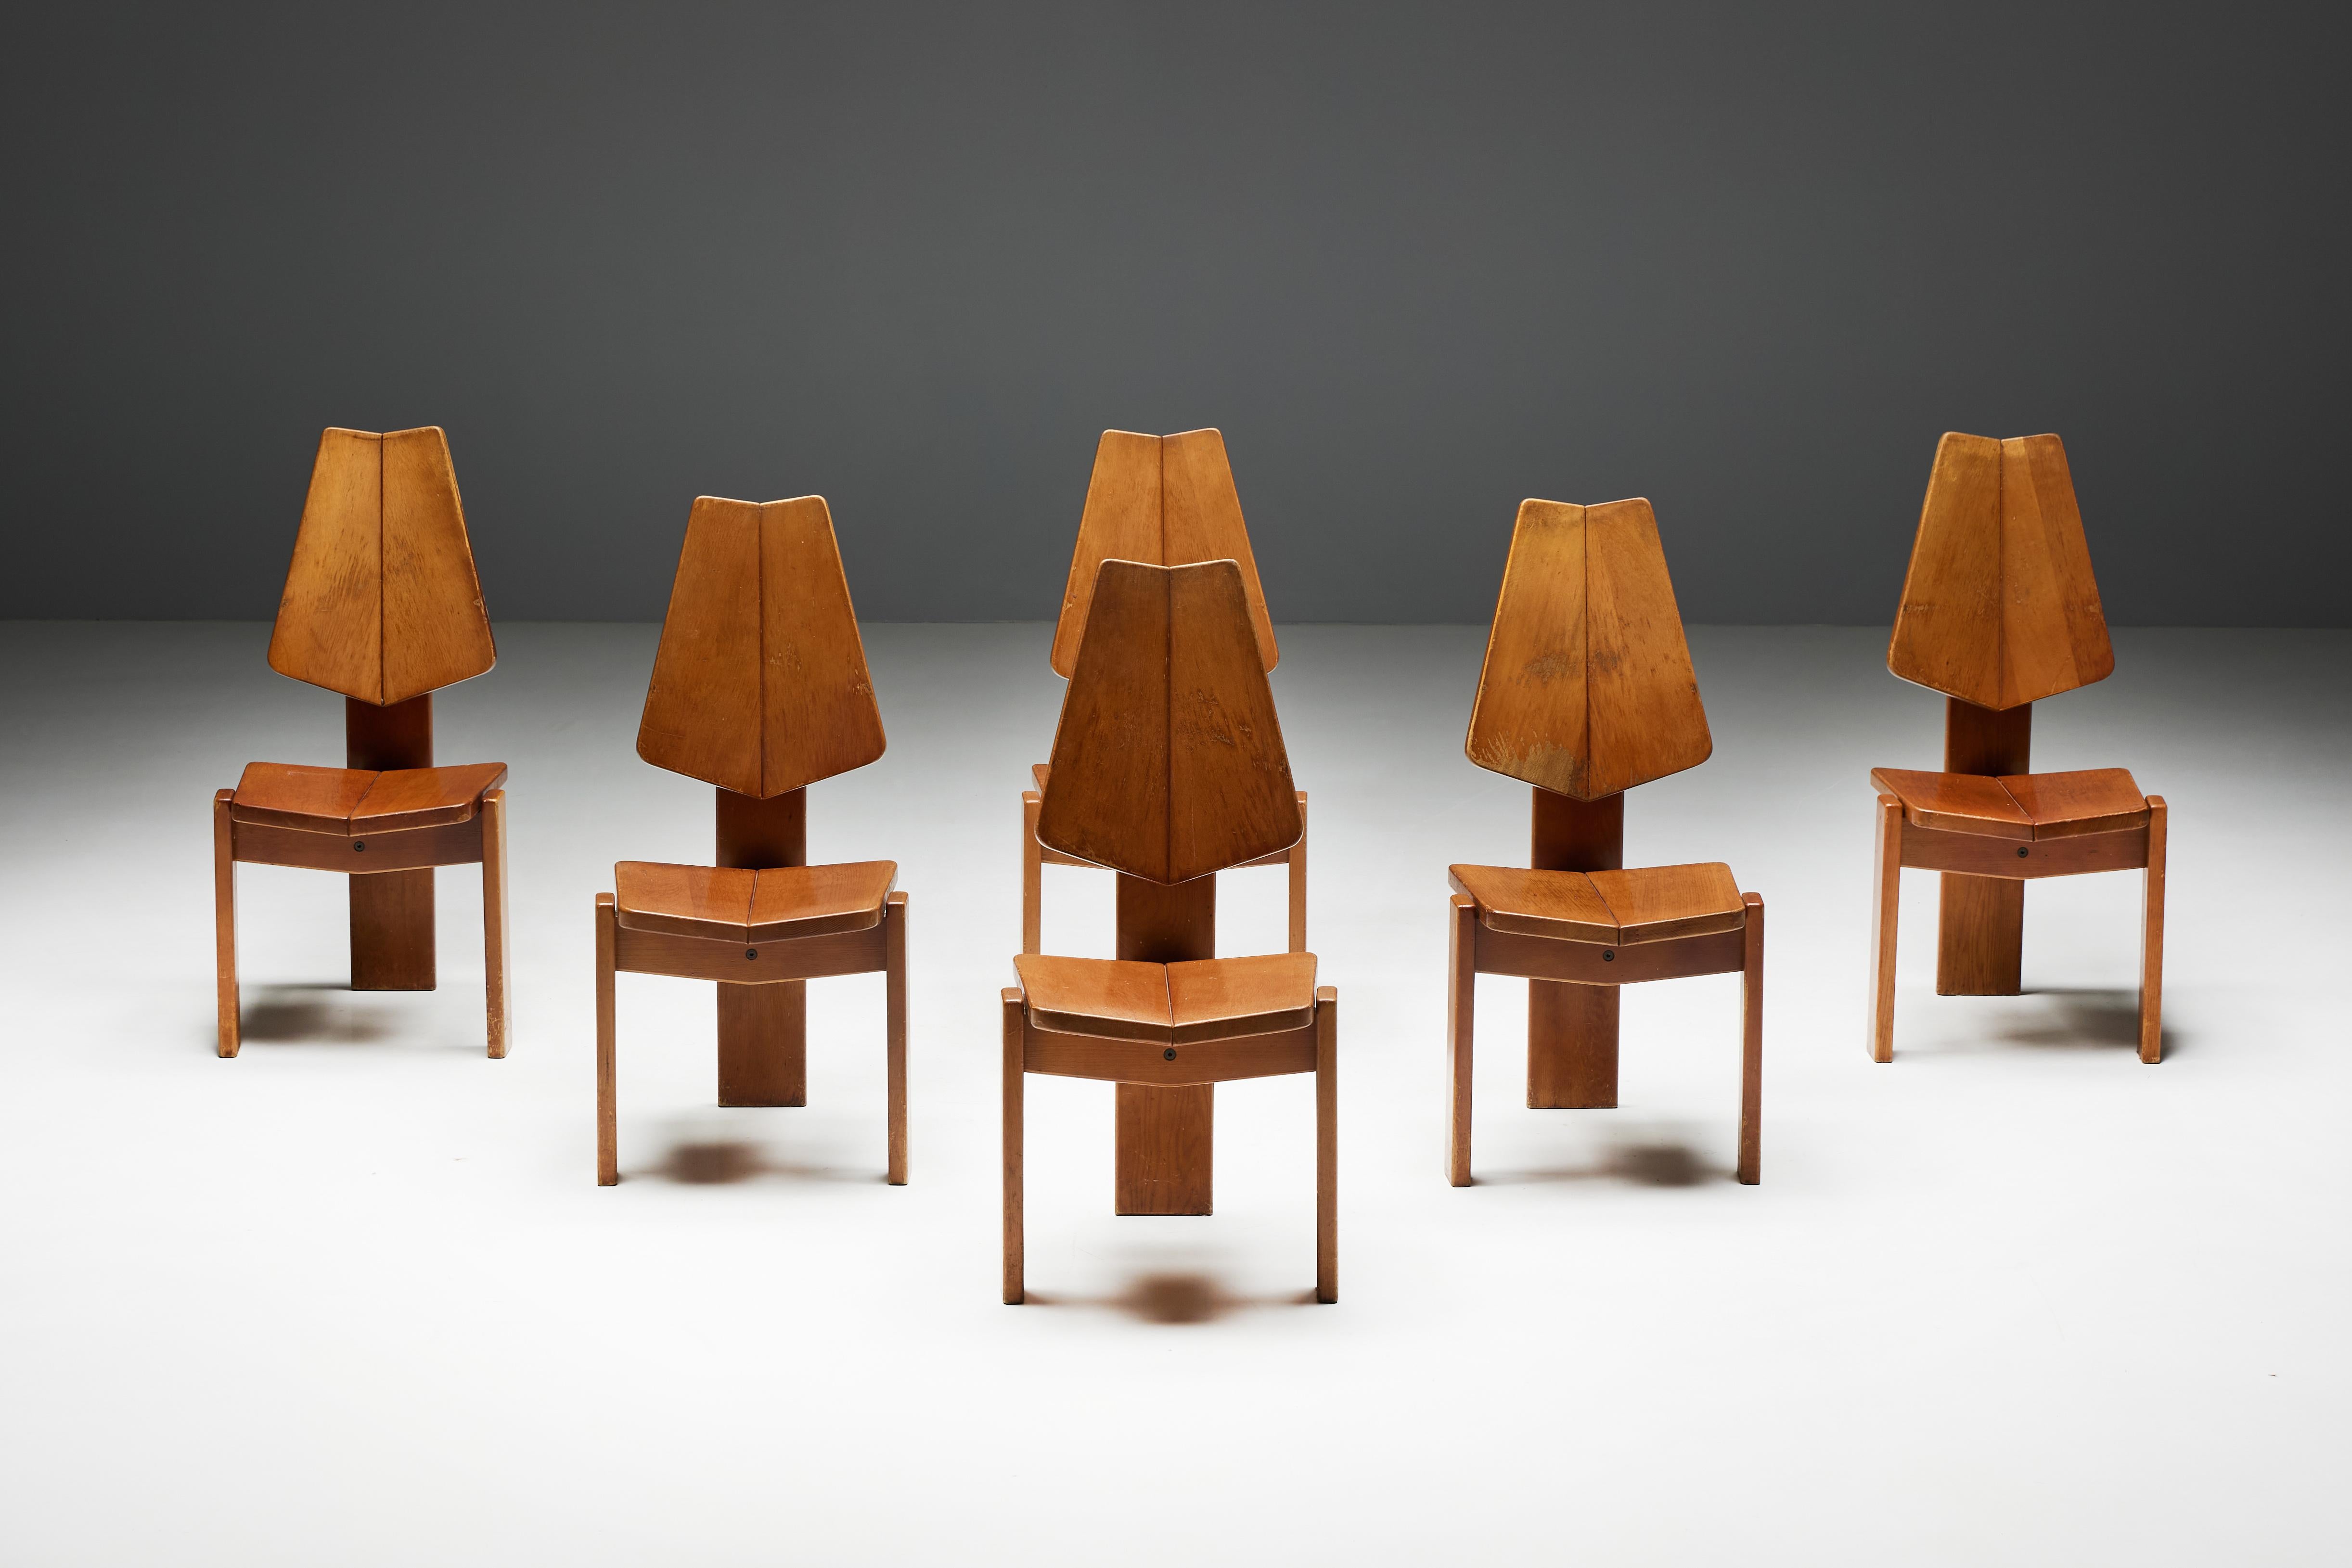 Belgian Brutalist Wooden Dining Chairs, Belgium, 1970s For Sale